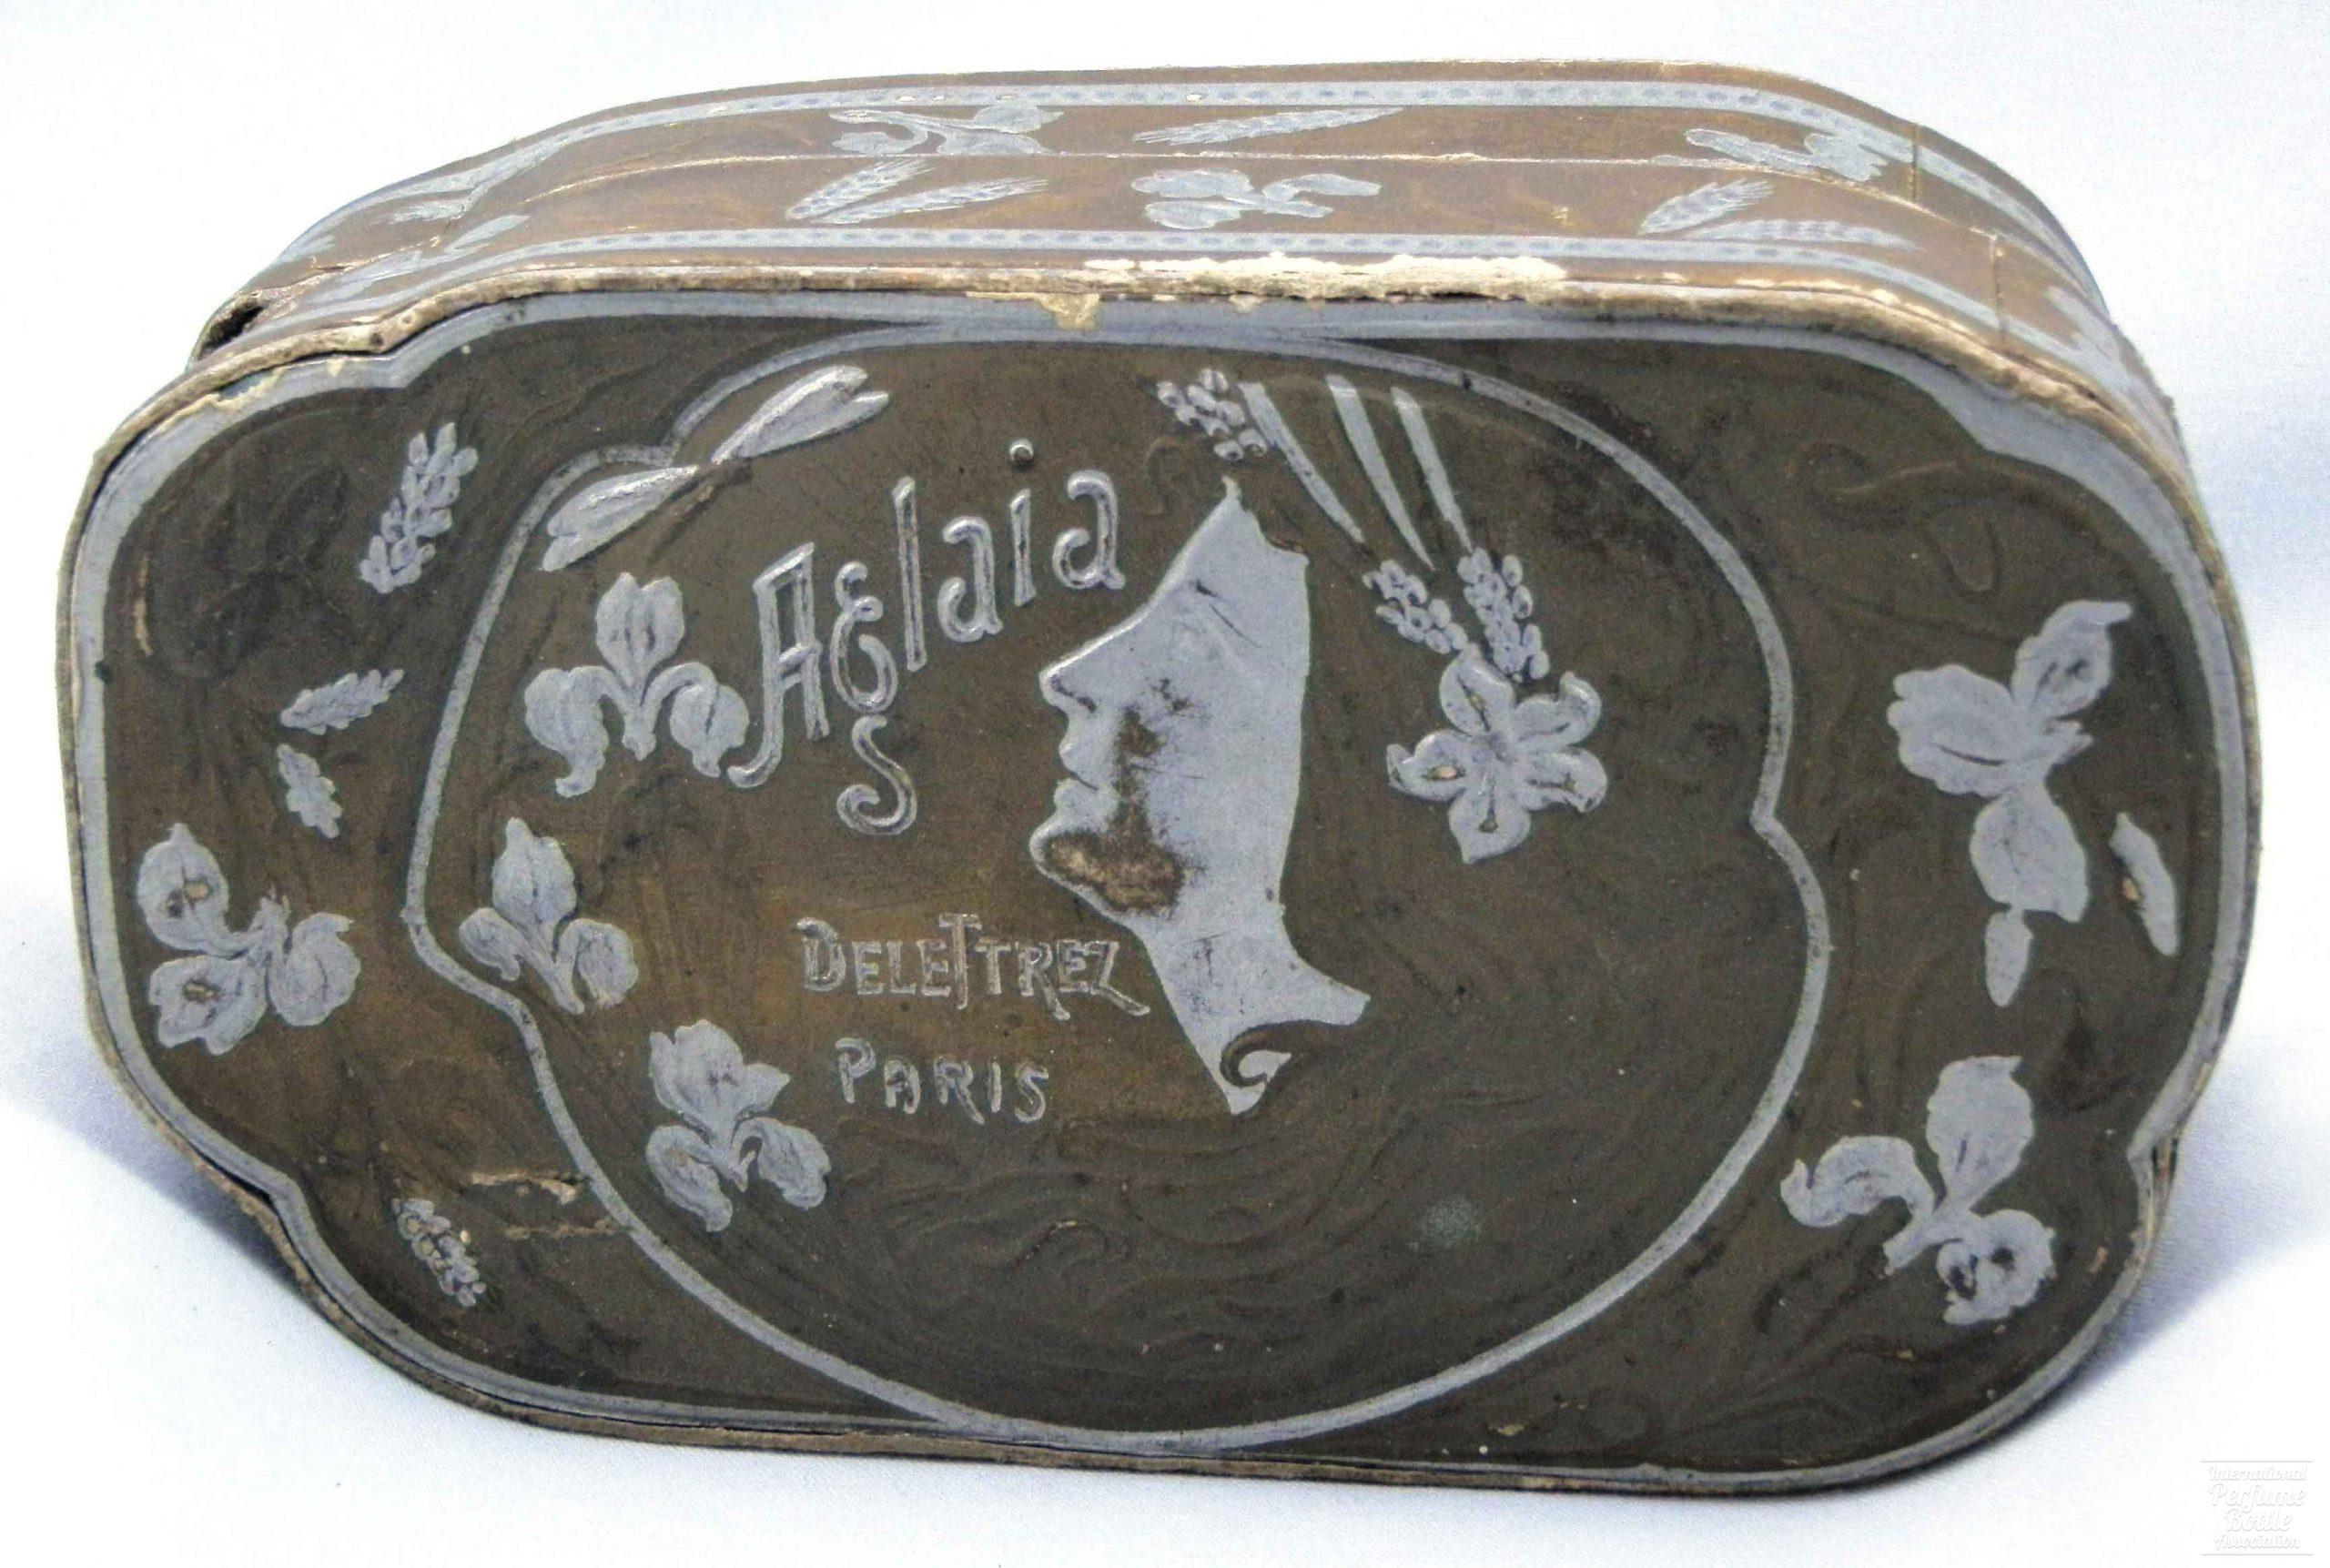 "Aglaia" Presentation Box by Delettrez